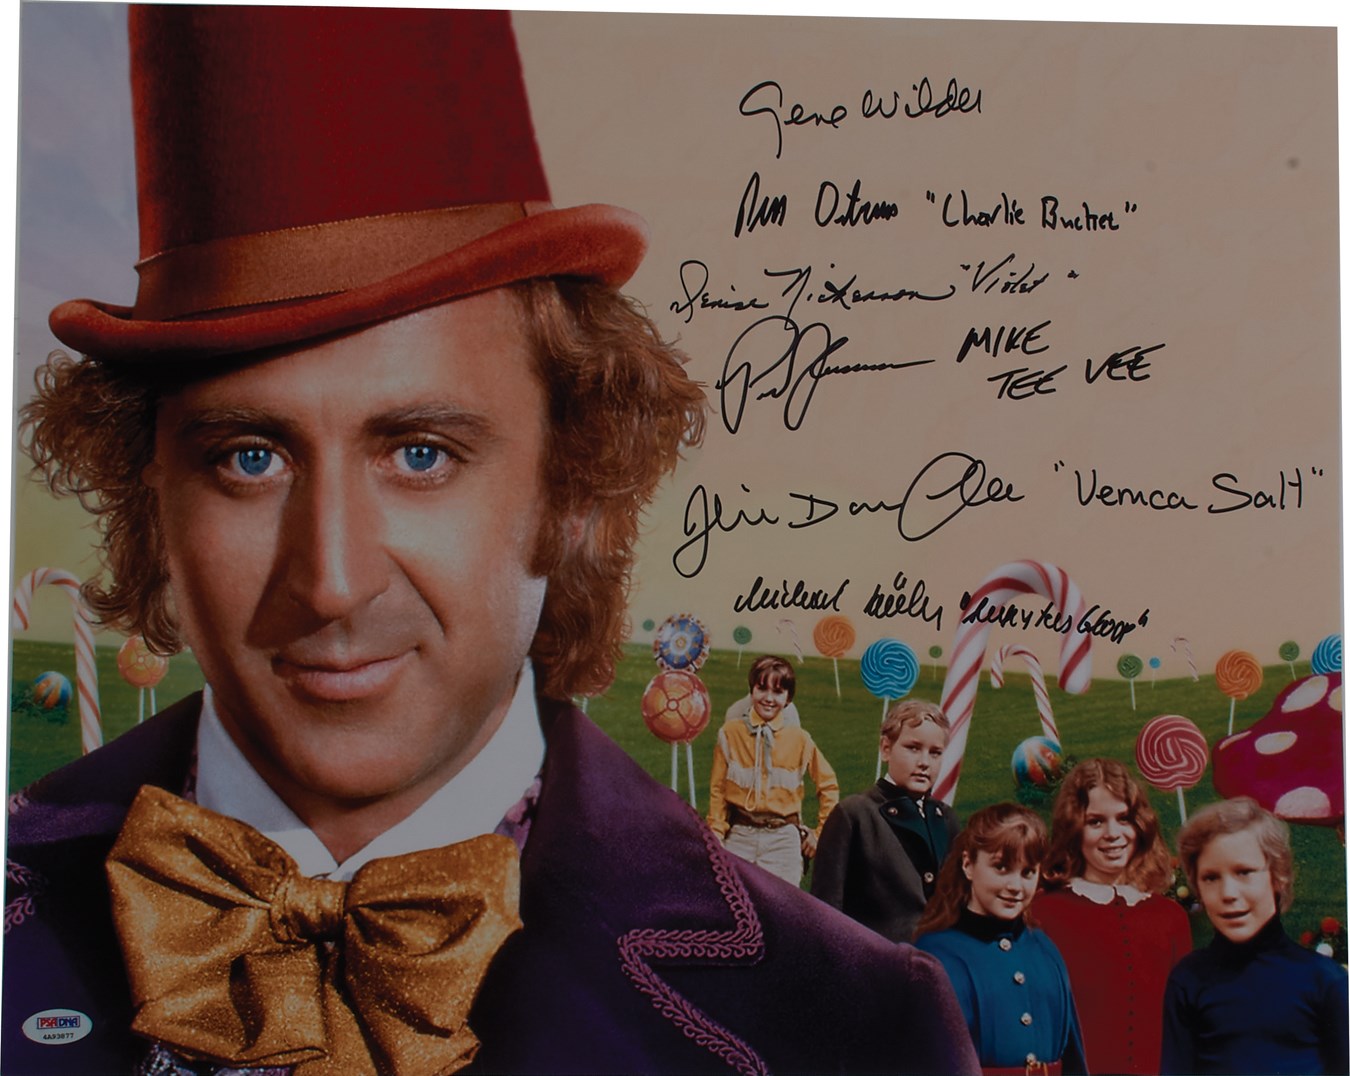 - Willie Wonka 16x20" Cast-Signed Photo with Gene Wilder (PSA)